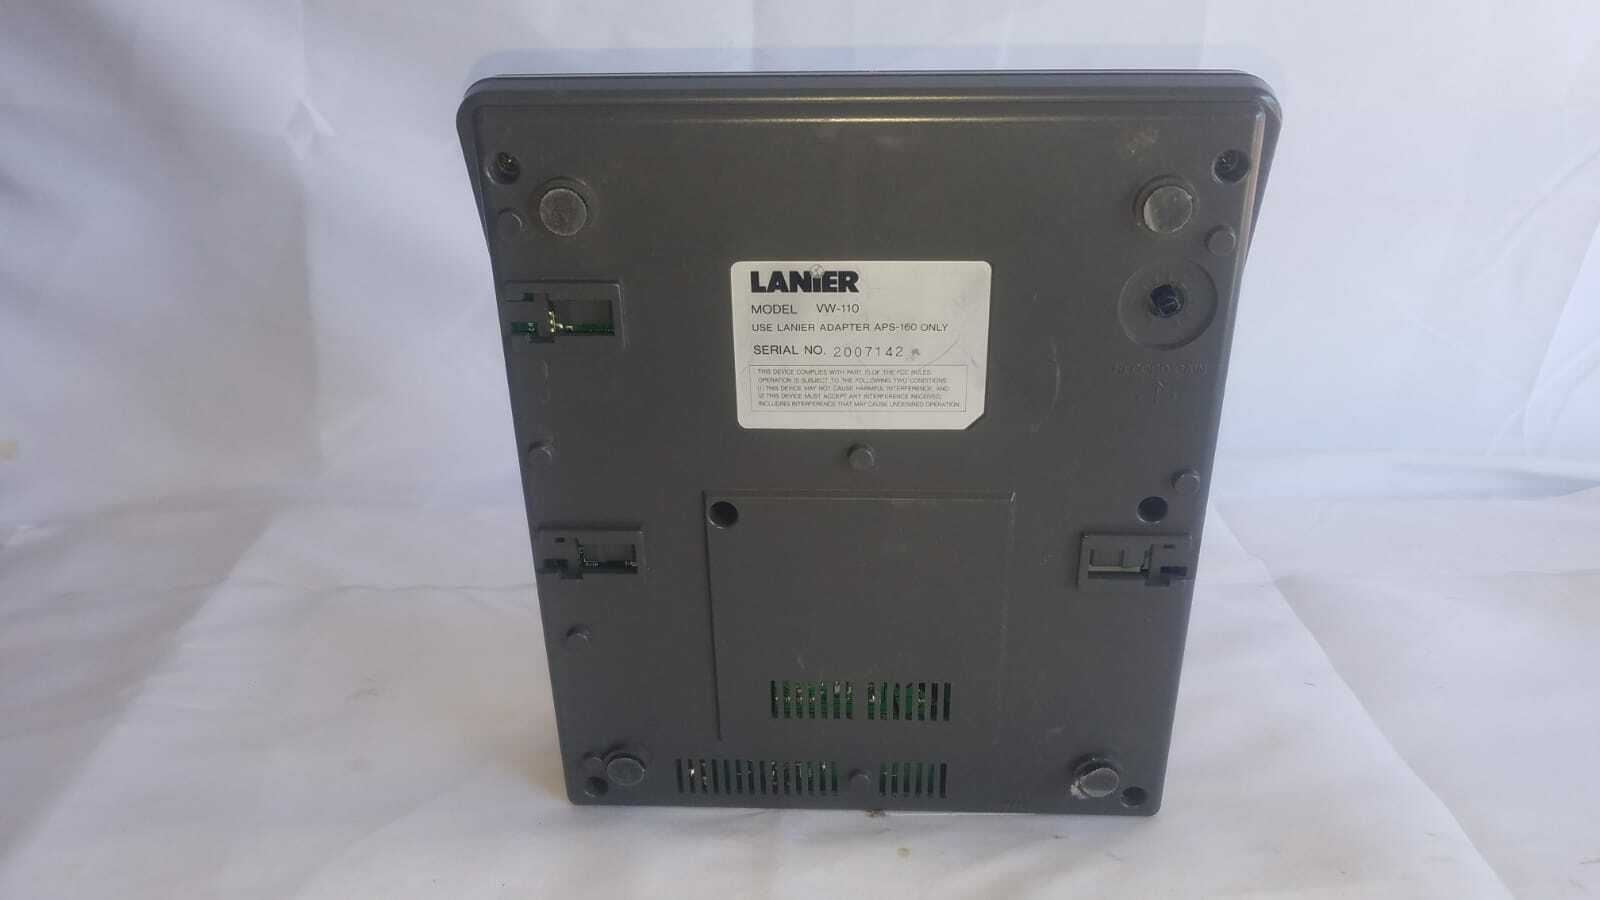 Lanier VW-110 Standard Cassette Dictation Machine (NY266U) DIAGNOSTIC ULTRASOUND MACHINES FOR SALE